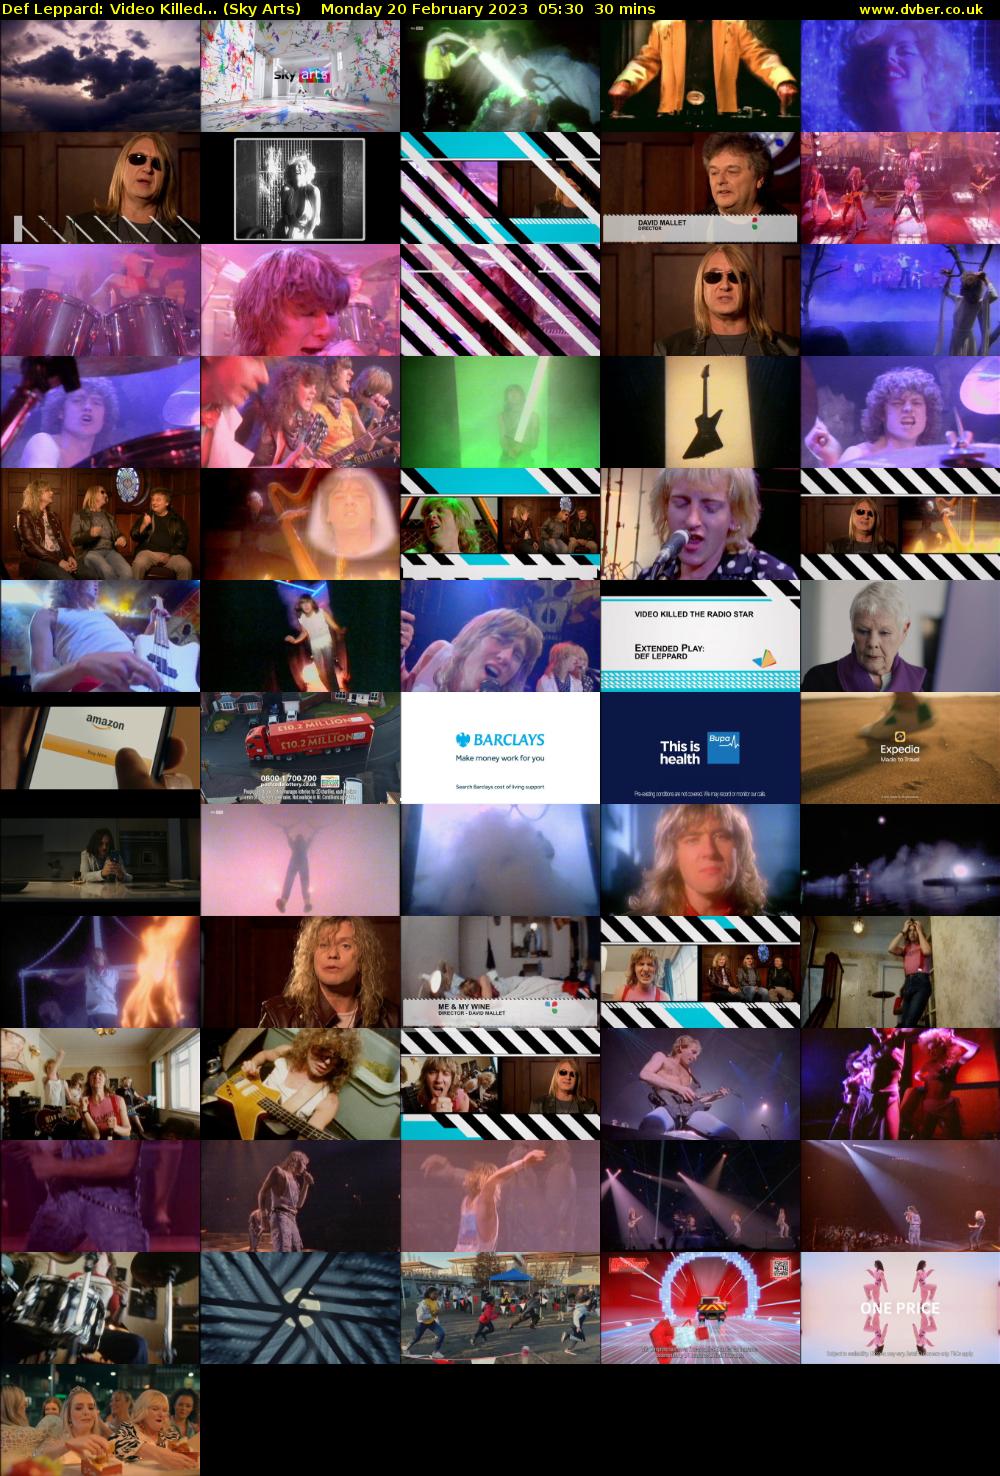 Def Leppard: Video Killed... (Sky Arts) Monday 20 February 2023 05:30 - 06:00